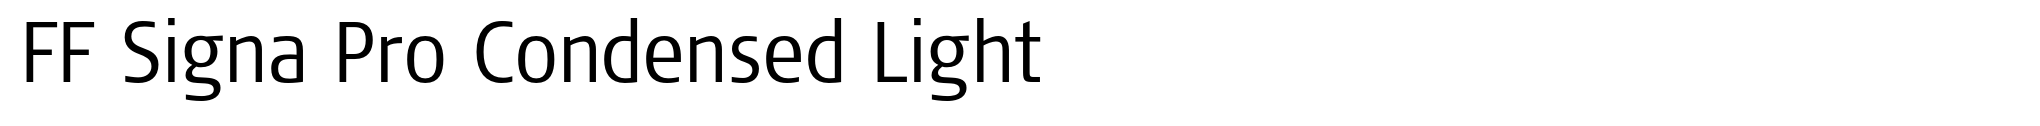 FF Signa Pro Condensed Light image